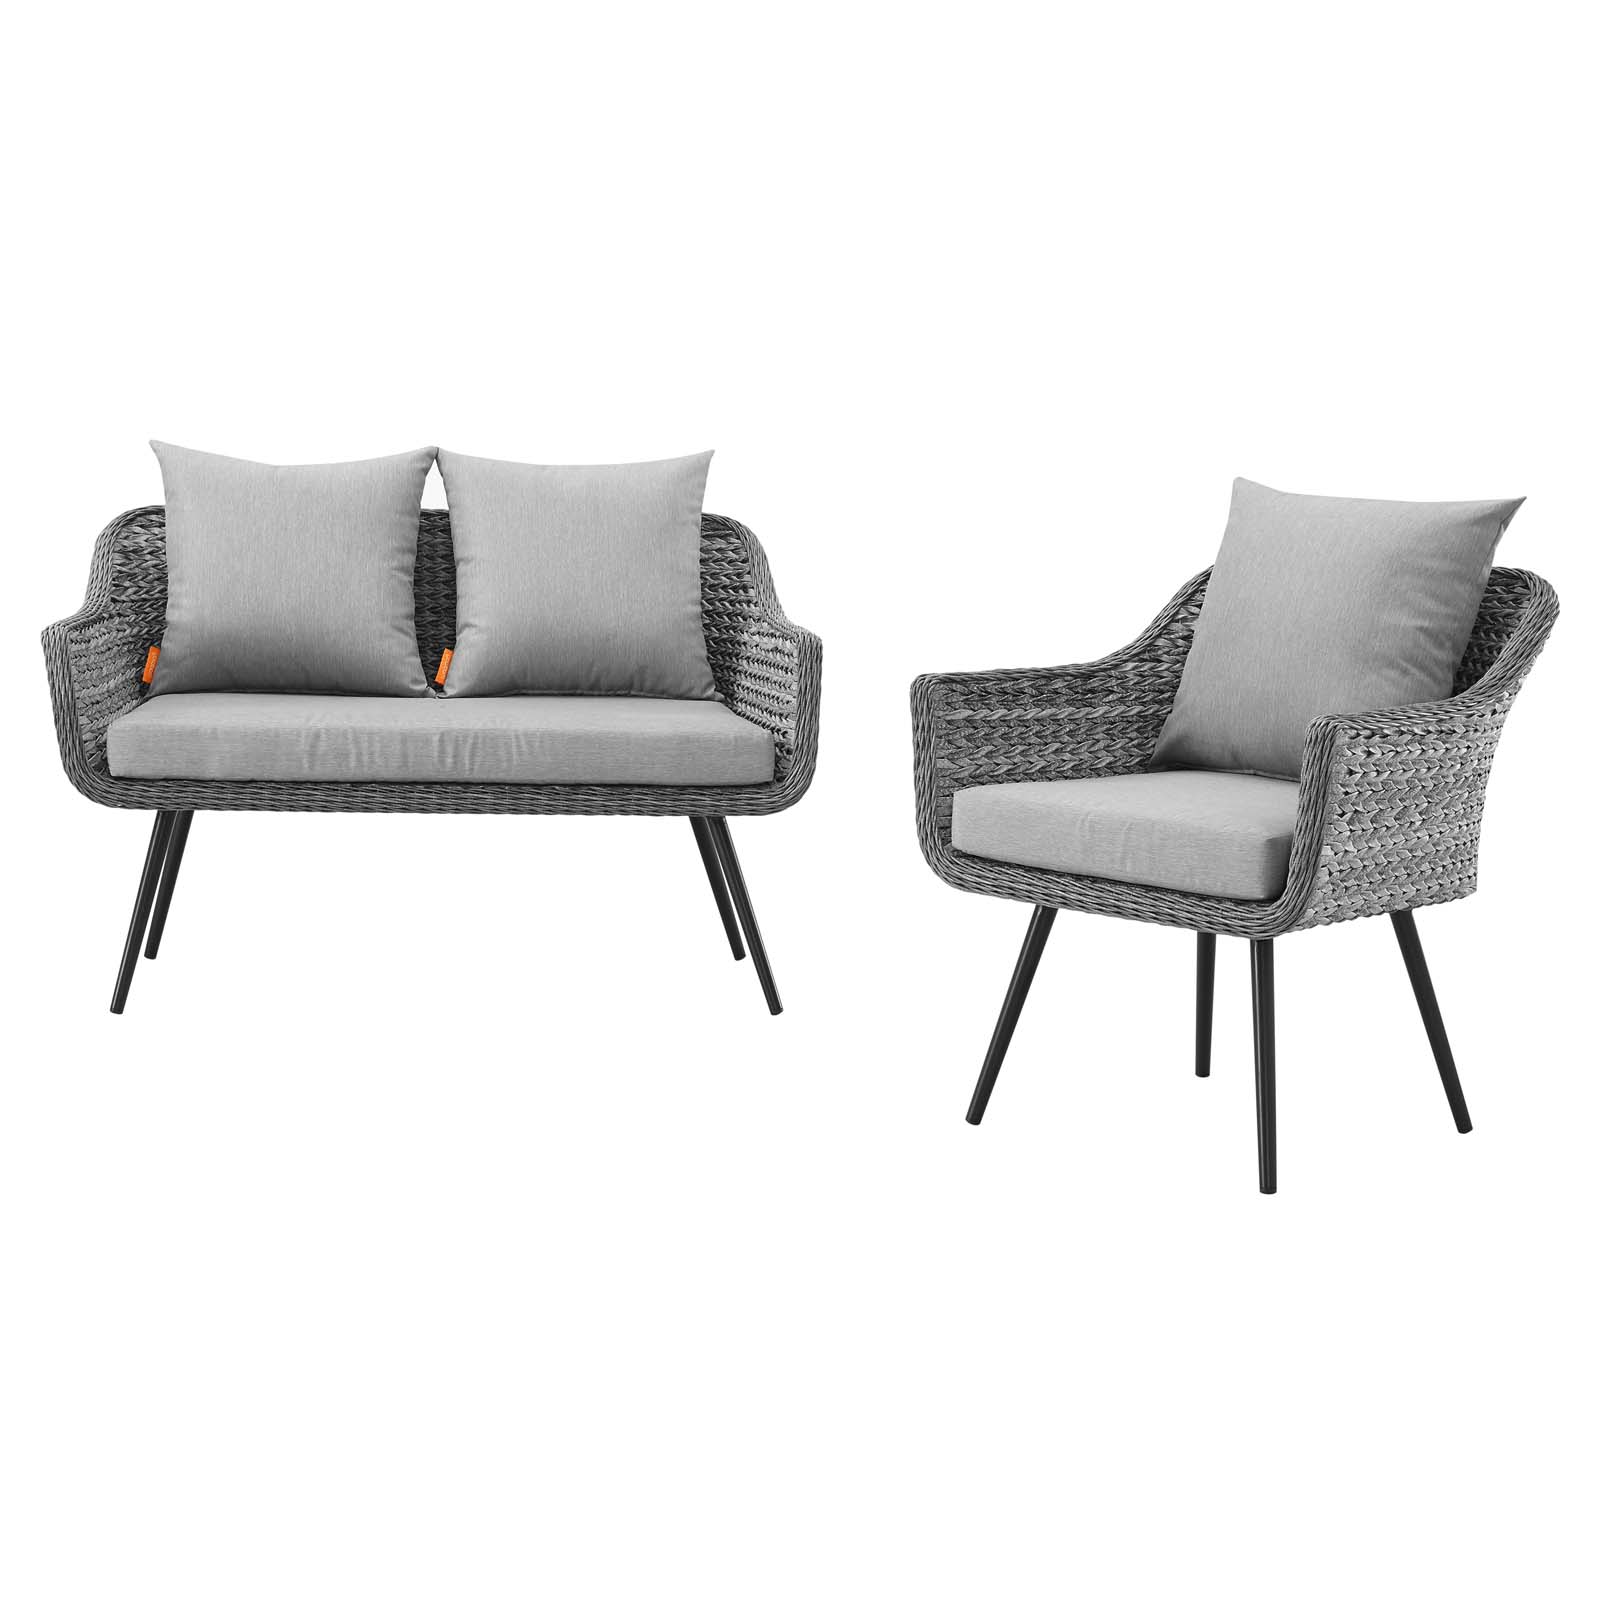 Contemporary Modern Urban Designer Outdoor Patio Balcony Garden Furniture Lounge Sofa and Chair Set, Aluminum Fabric Wicker Rattan, Grey Gray - image 2 of 8